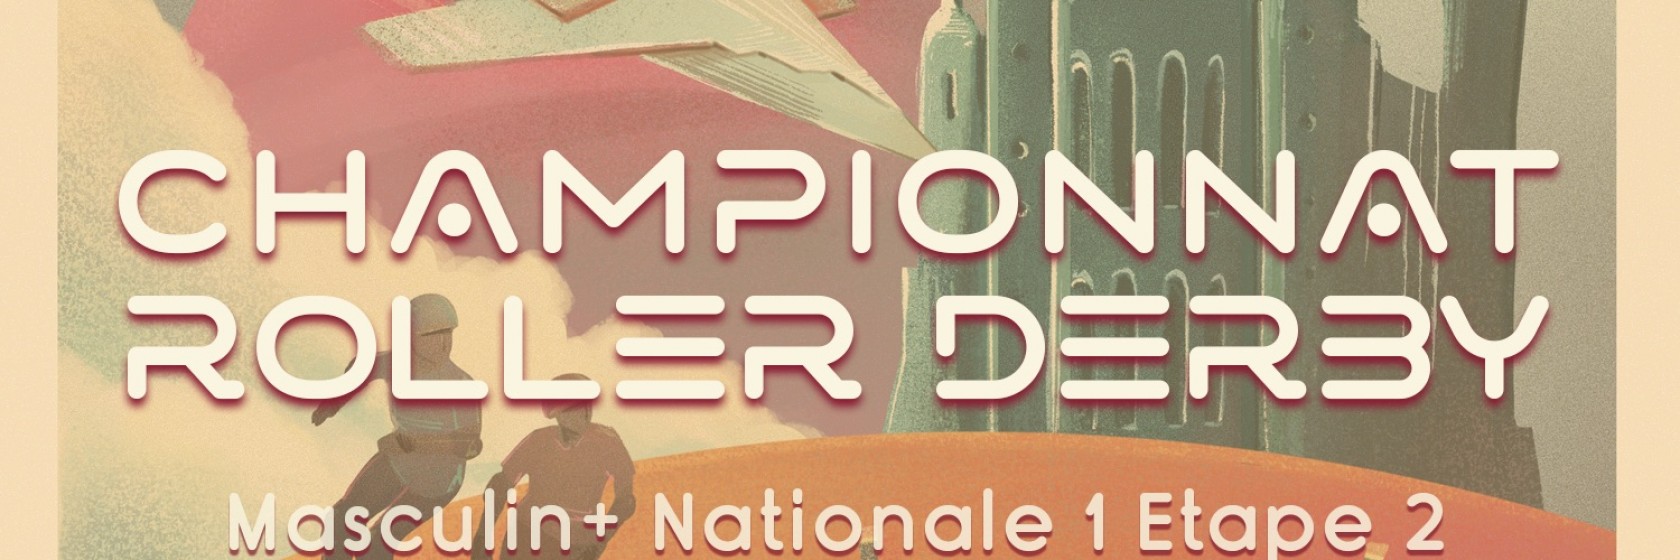 Championnat roller derby masculin + France Lyon 2024 Nationale 1